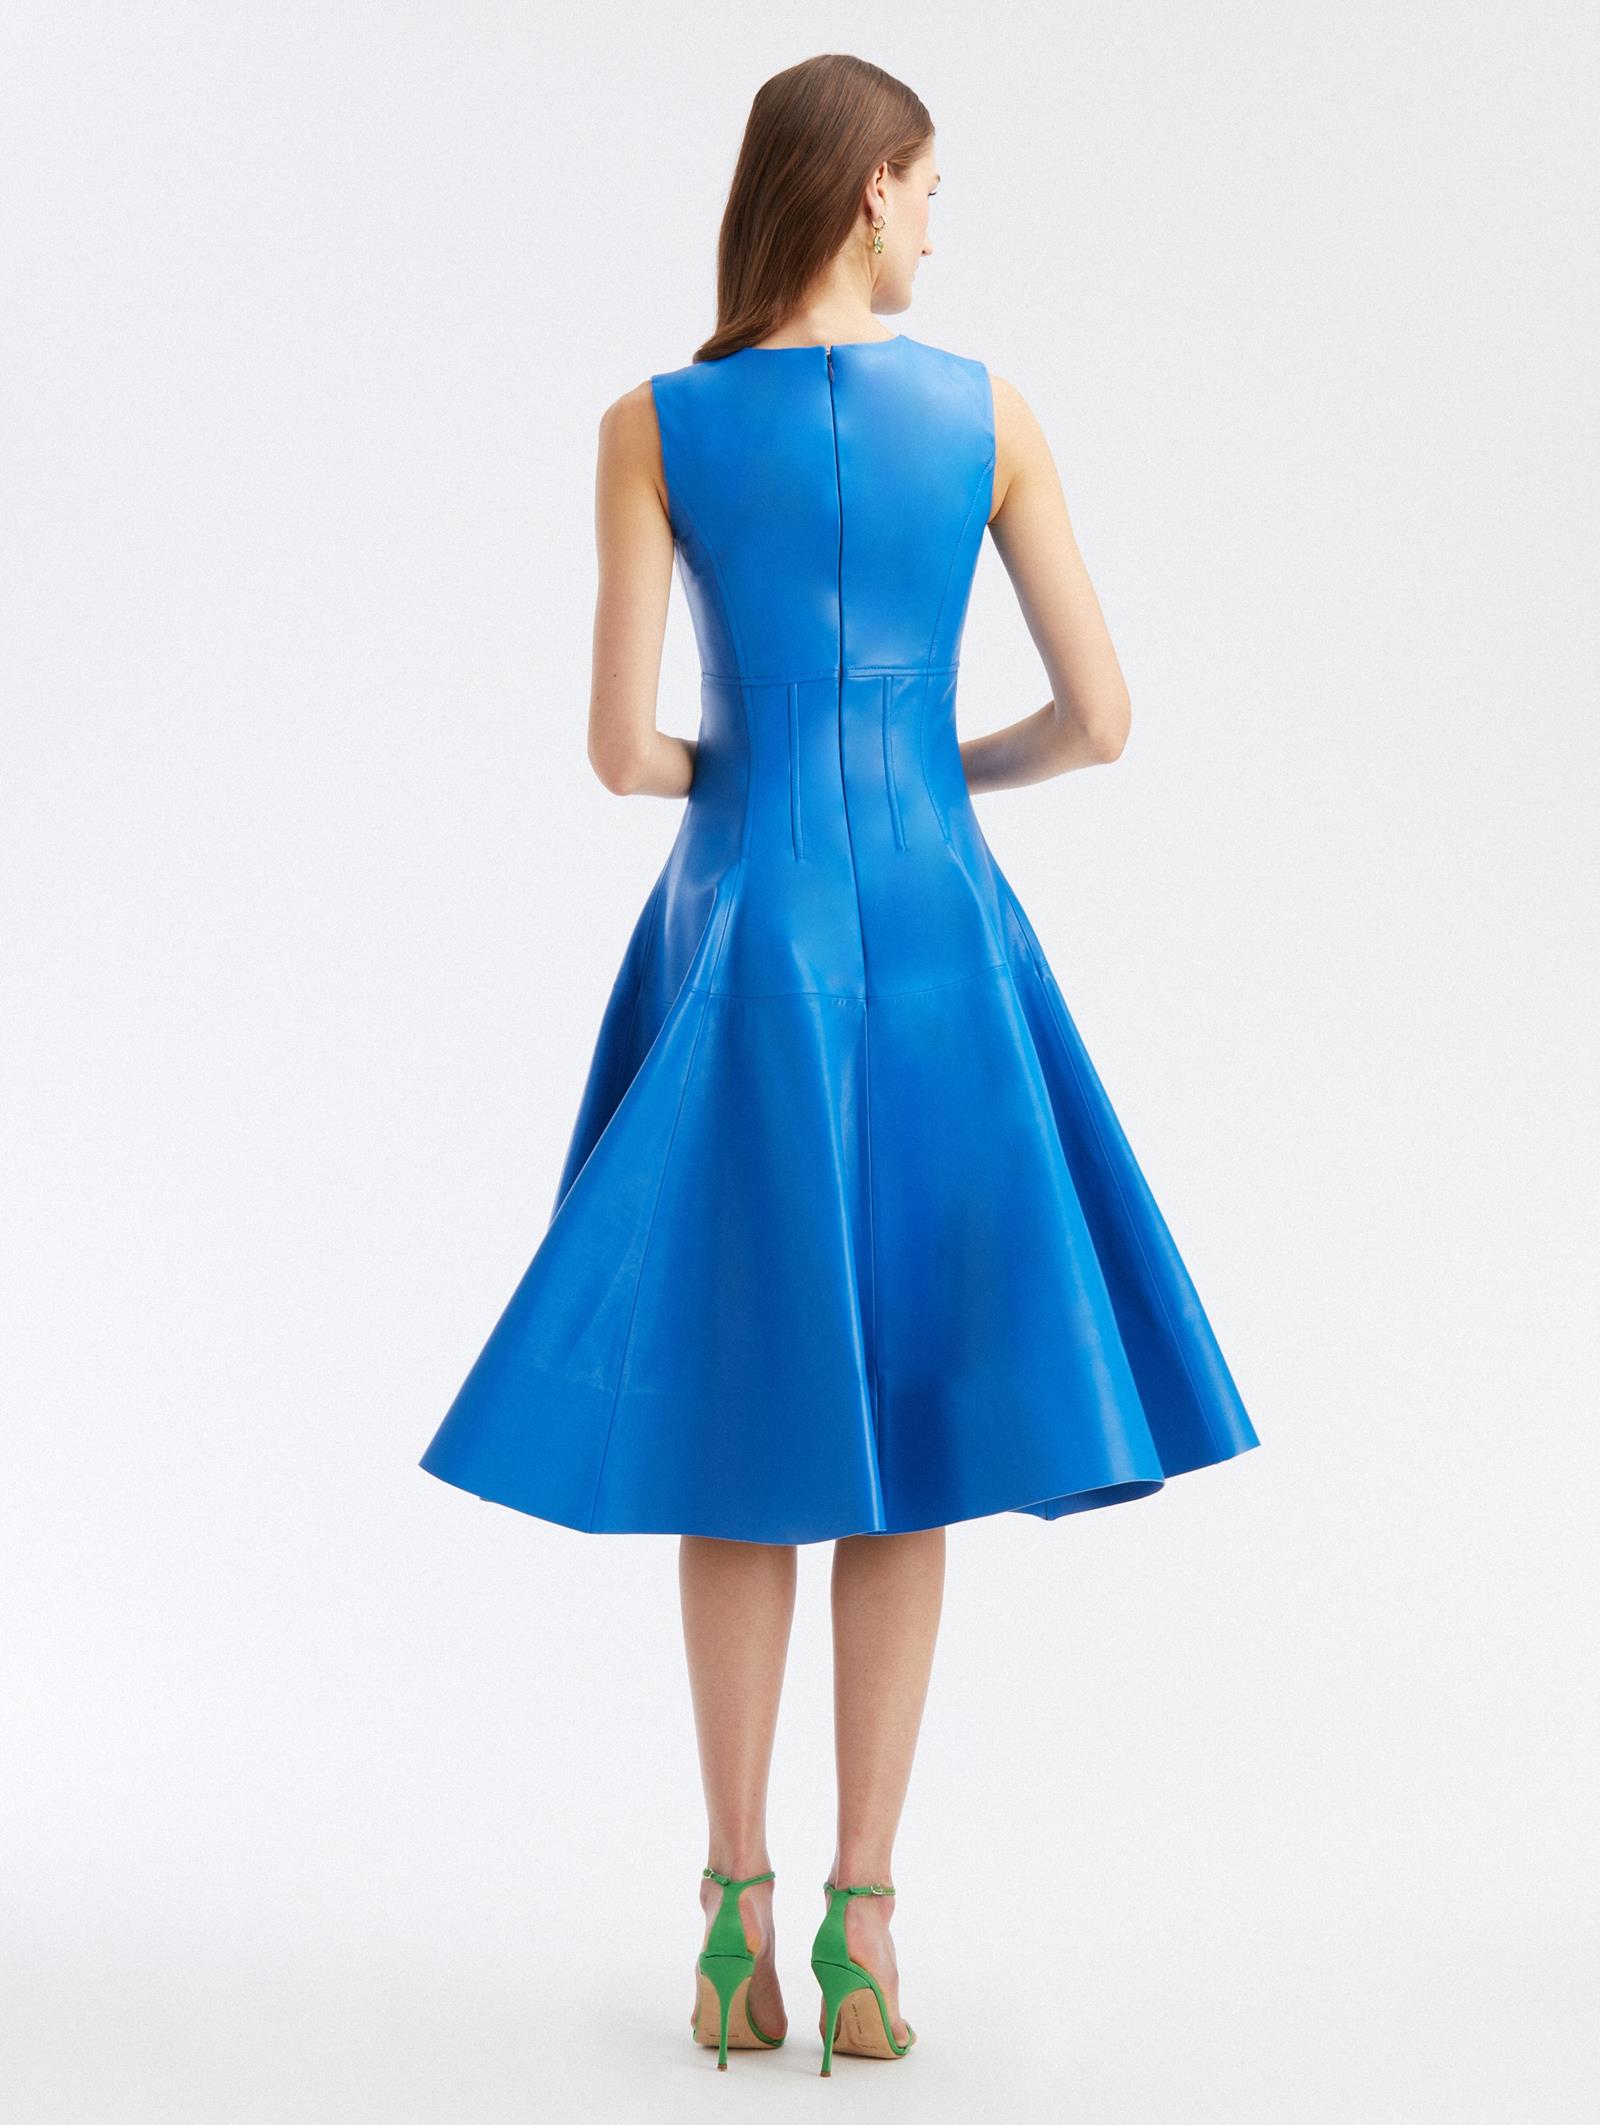 Sleeveless A-Line Leather Dress | Dresses | Oscar de la Renta Cobalt |  Oscar de la Renta